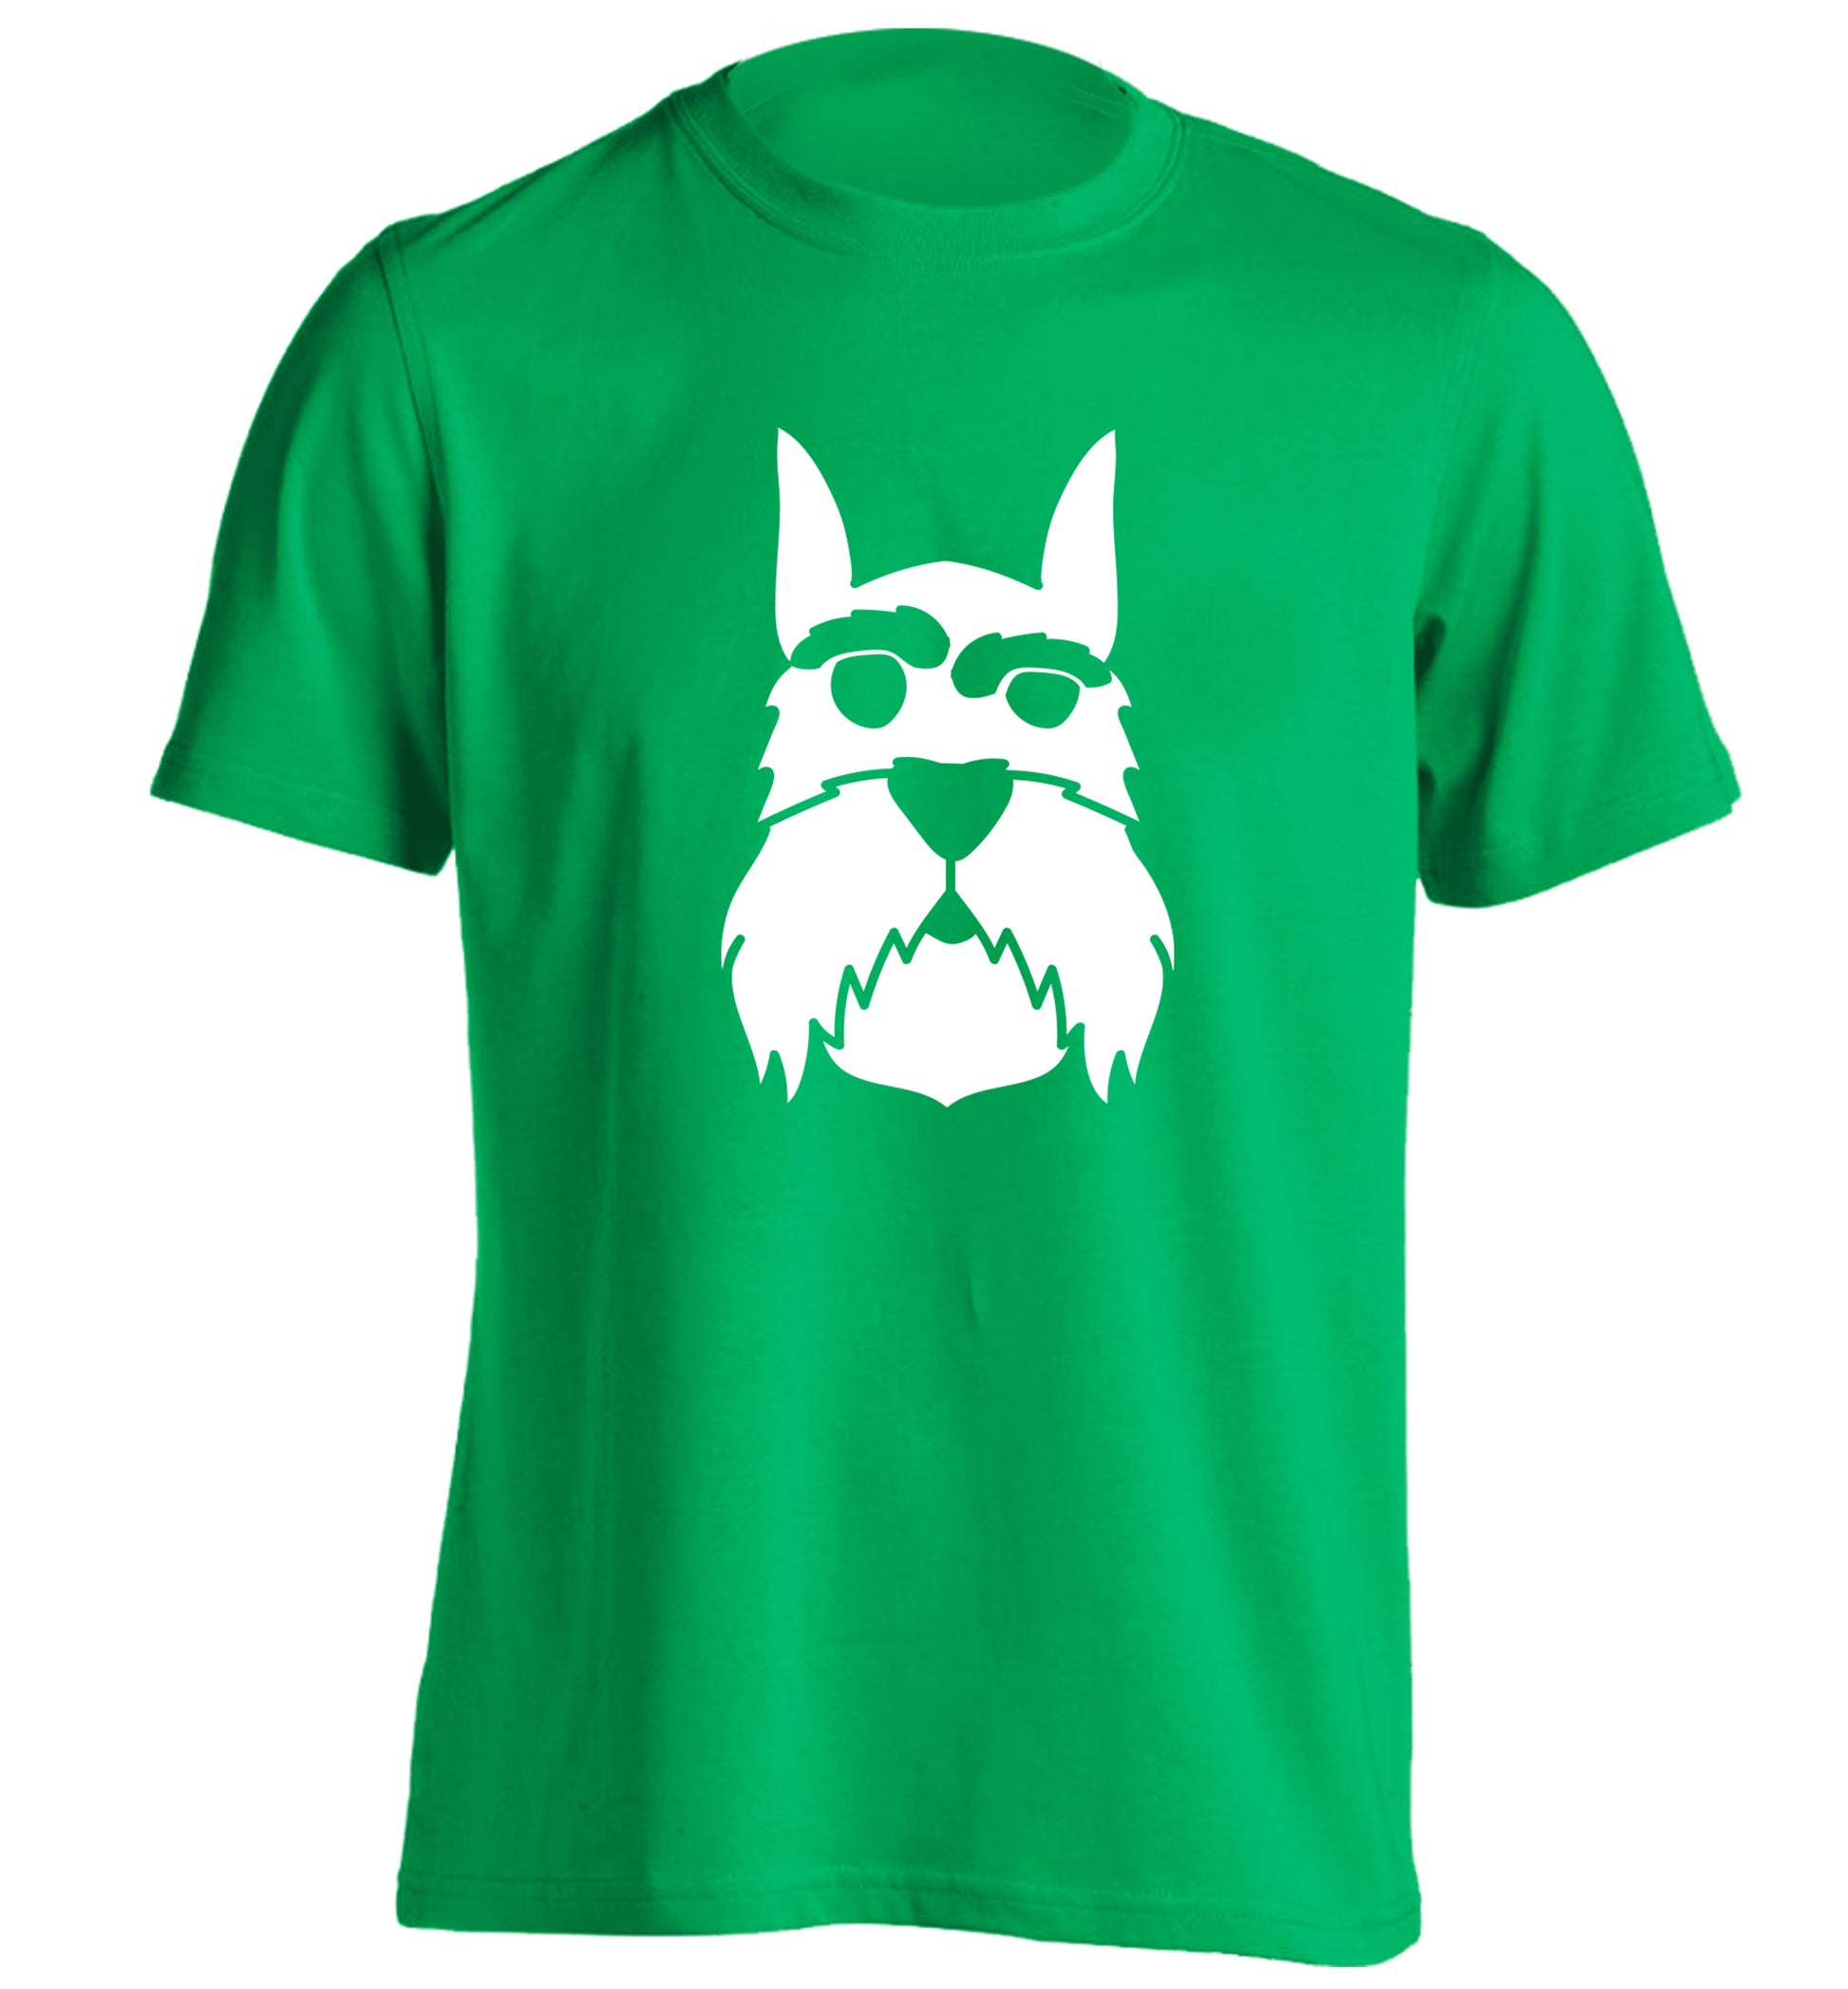 Schnauzer dog illustration adults unisex green Tshirt 2XL